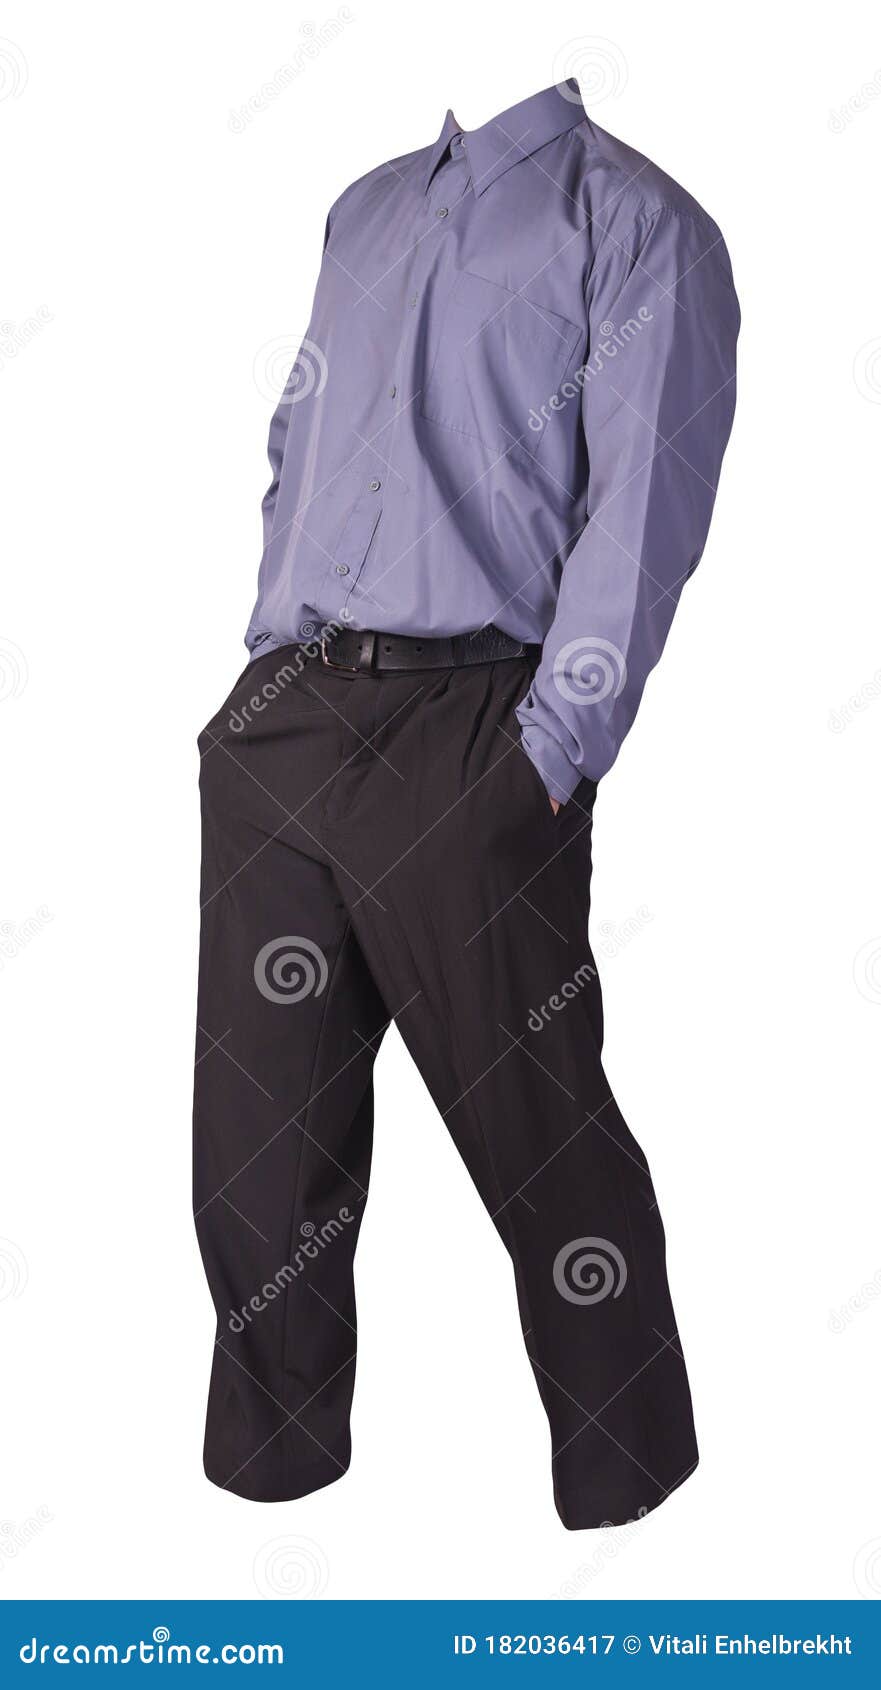 Dressing in a purple shirt, gray pants, a black tie - stock photo 4412022 |  Crushpixel